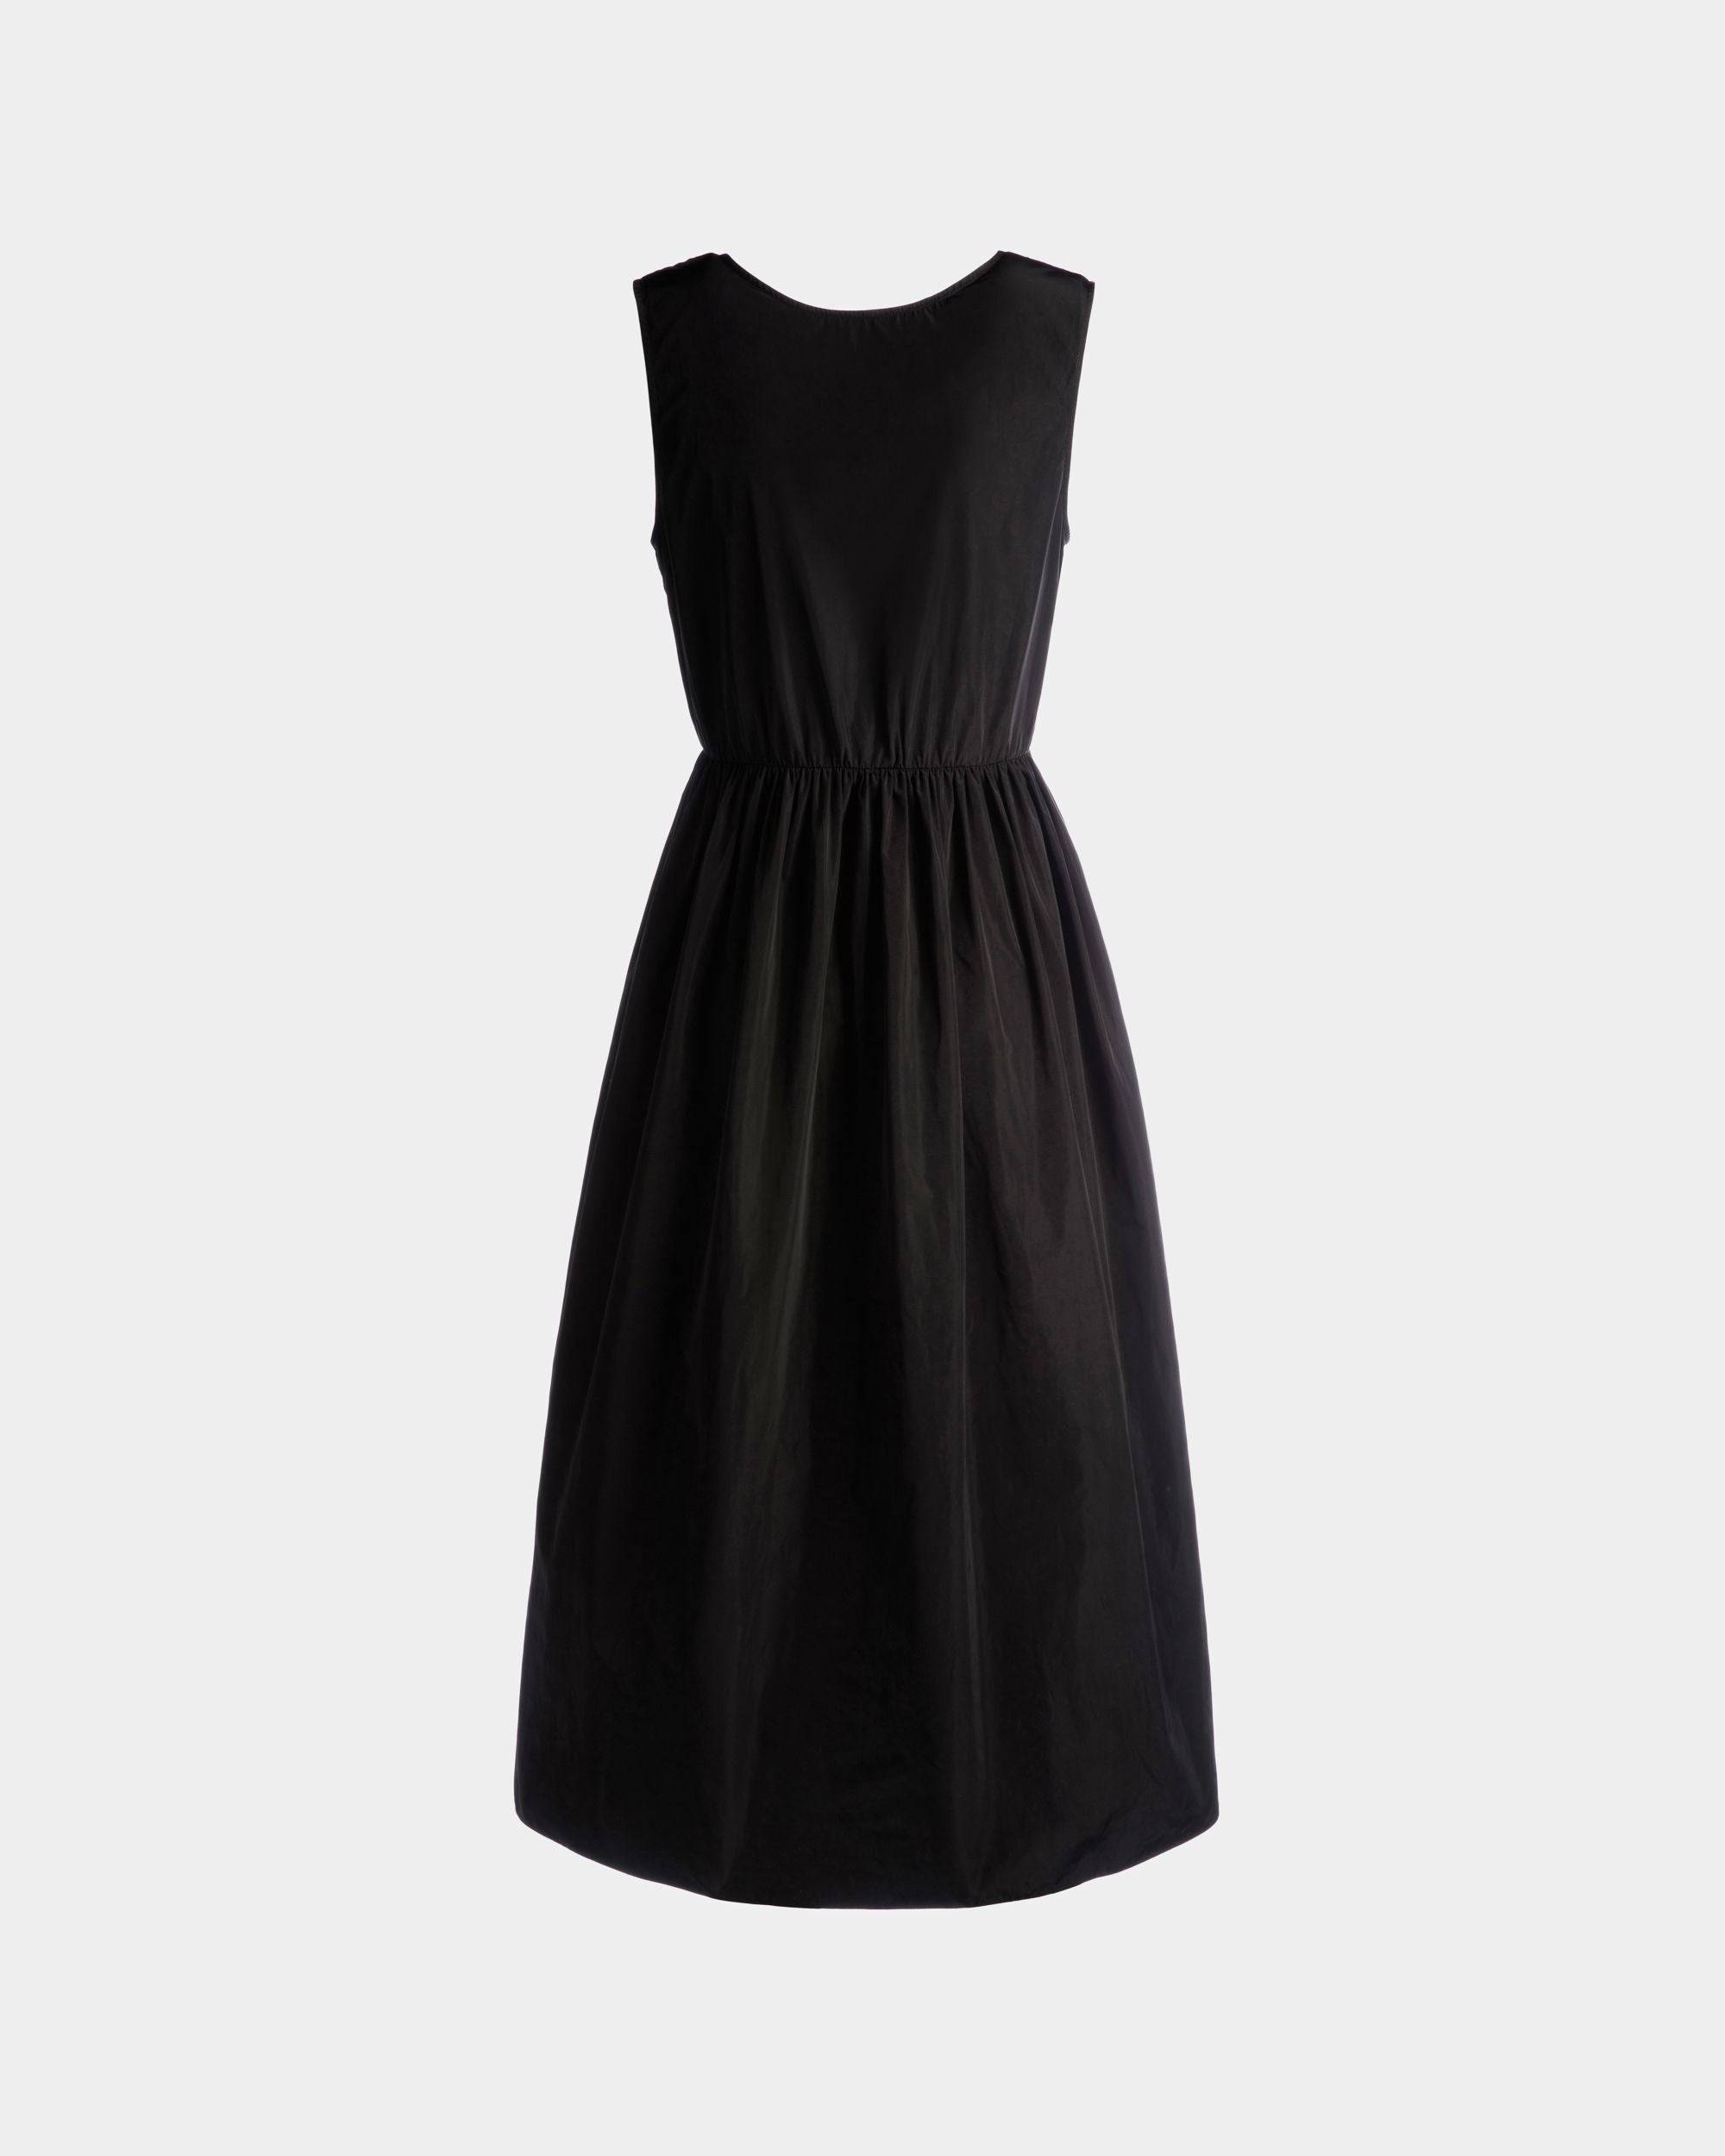 Women's Sleeveless Midi Dress in Black Technical Duchesse | Bally | Still Life Front